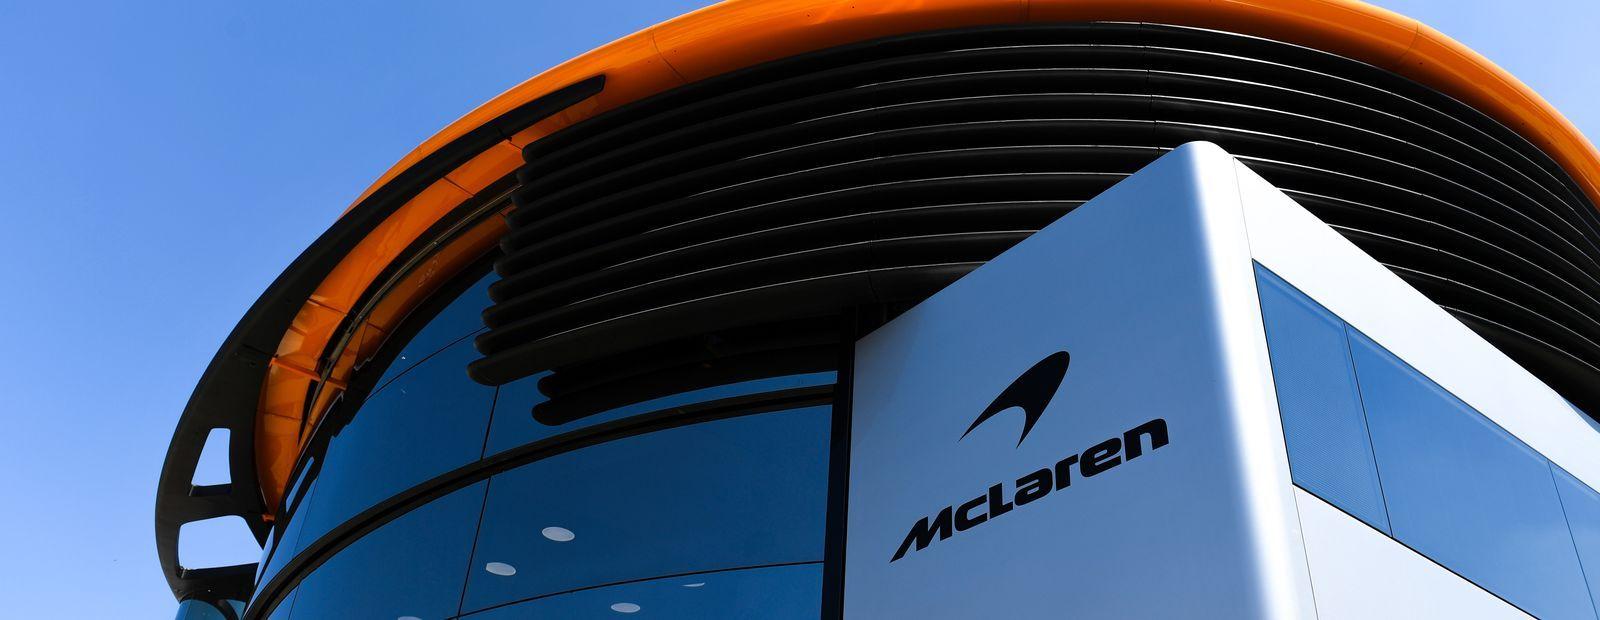 Mexca British American Tobacco Logo - McLaren Formula 1 - McLaren Racing announces global partnership with ...